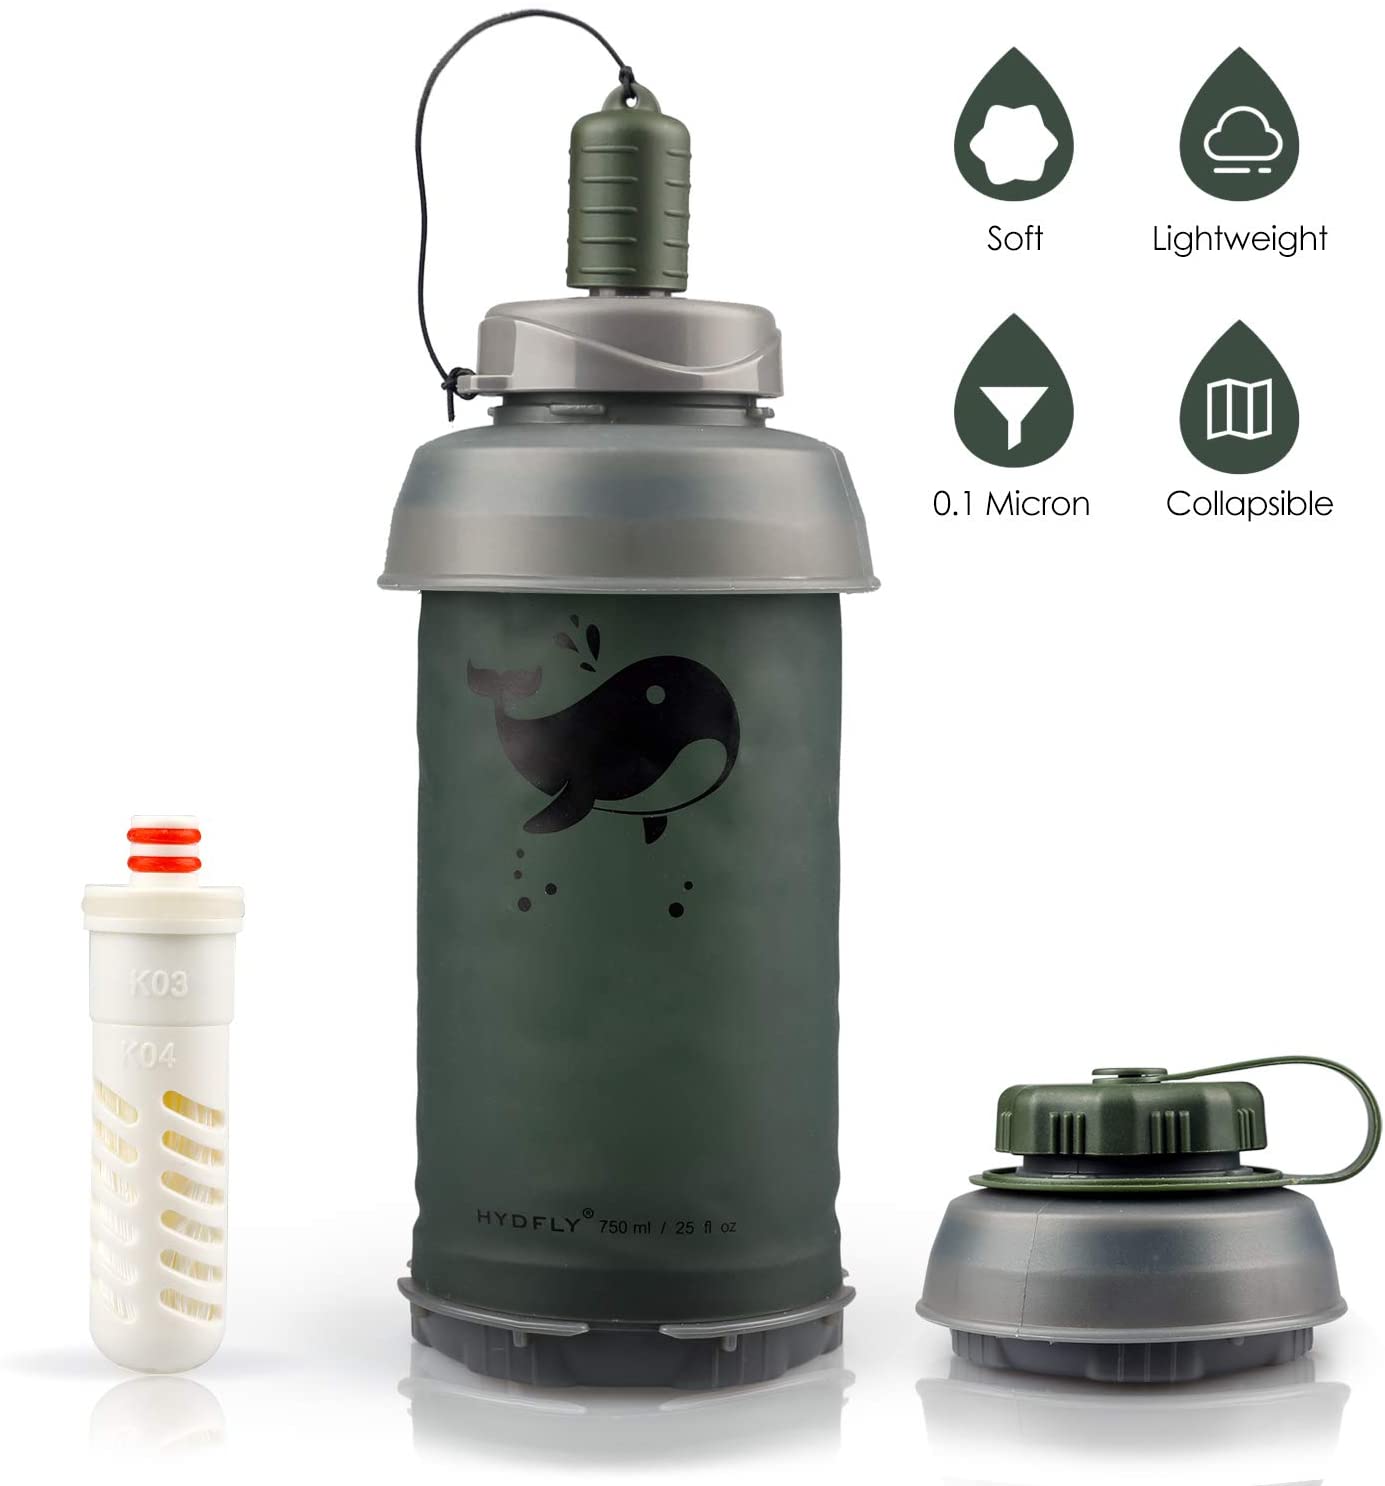 Reusable Filtering Water Bottle